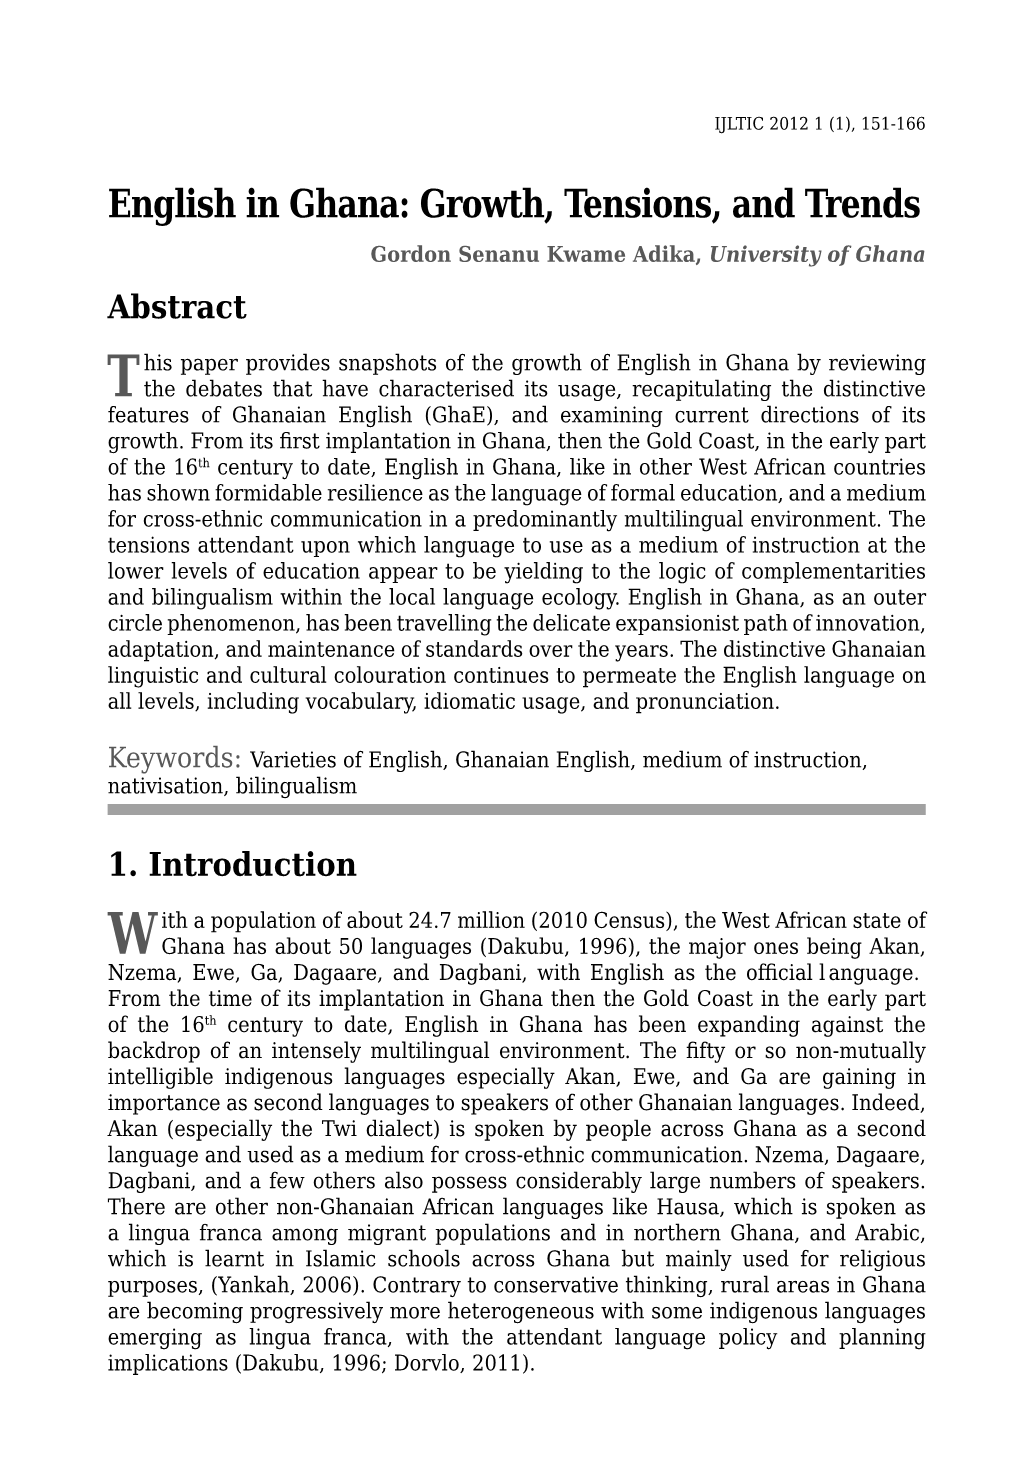 English in Ghana: Growth, Tensions, and Trends Gordon Senanu Kwame Adika, University of Ghana Abstract